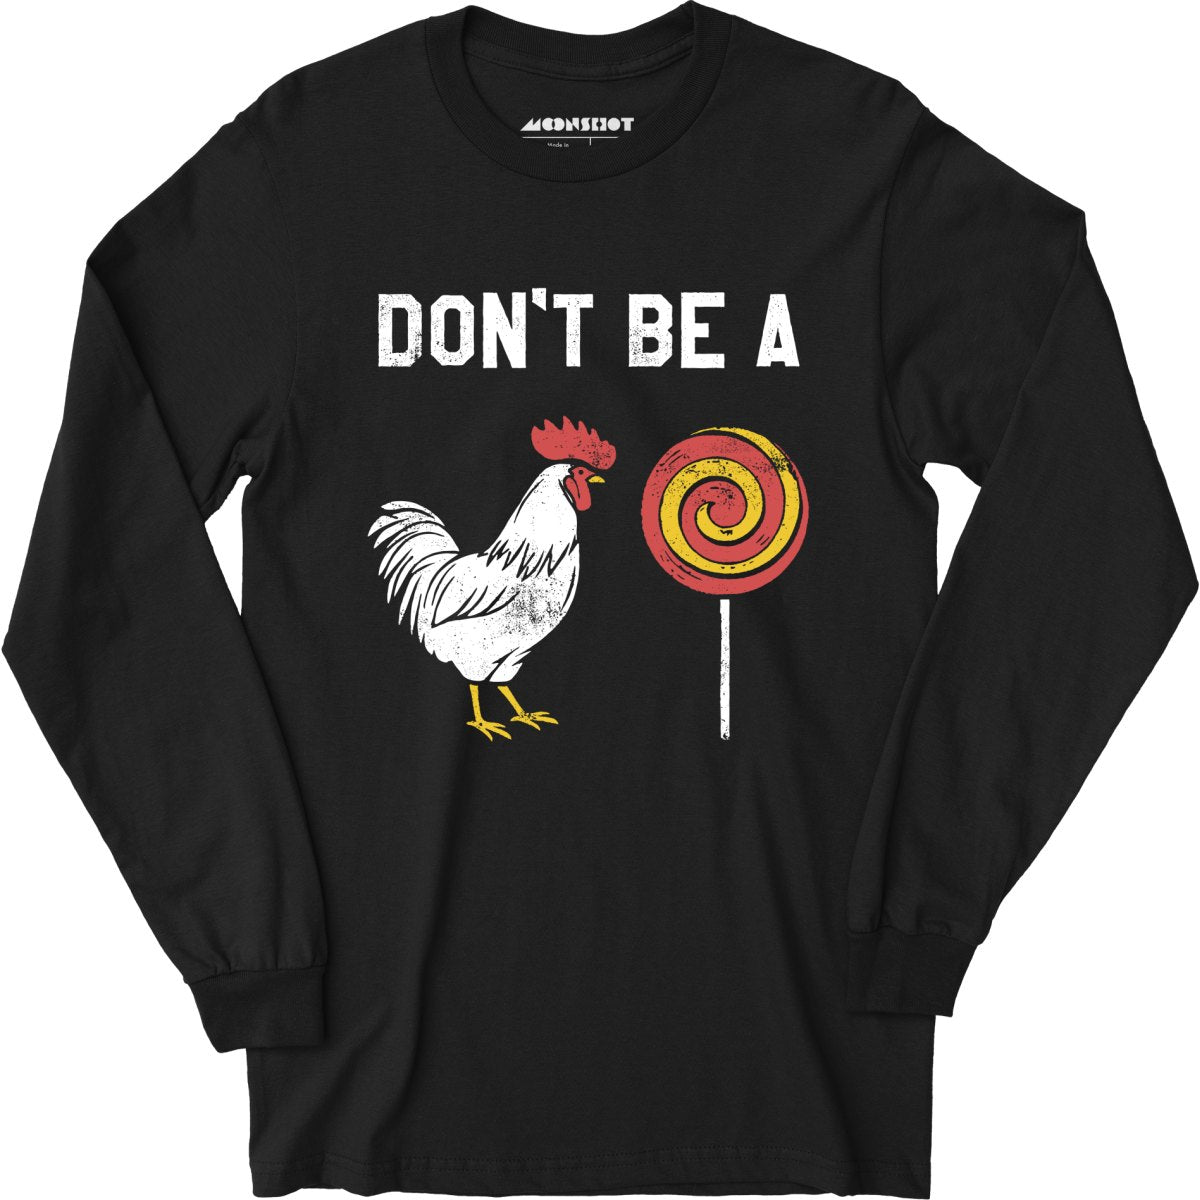 Don't Be a Cocksucker - Long Sleeve T-Shirt